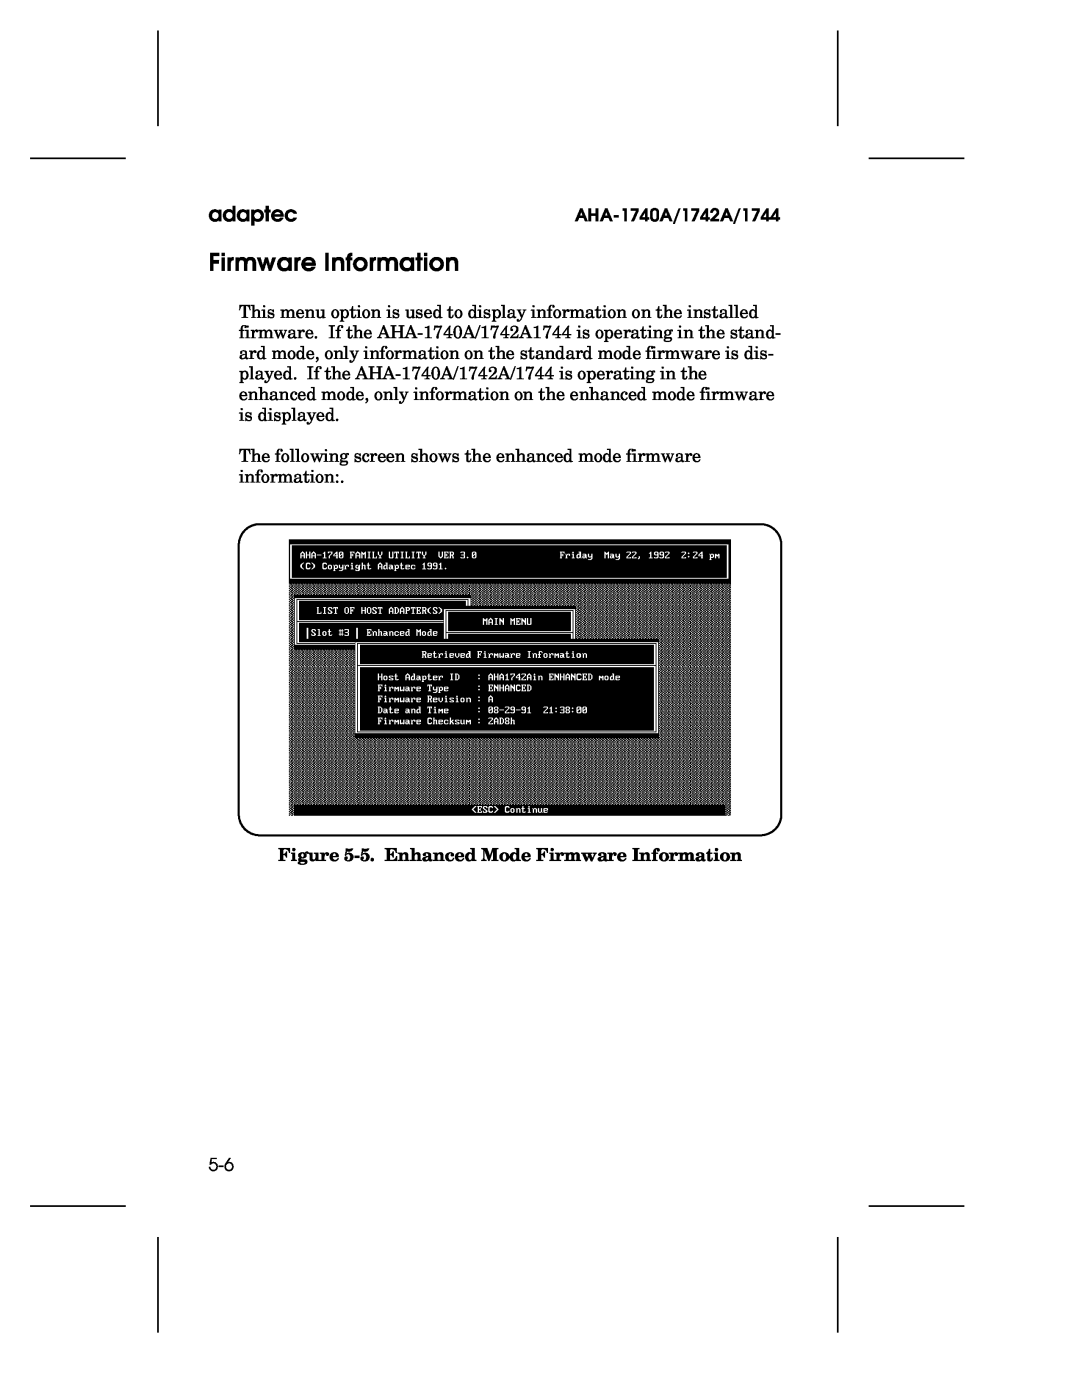 Adaptec AHA-1740A, 1742A, 1744 user manual 5. Enhanced Mode Firmware Information, adaptec 